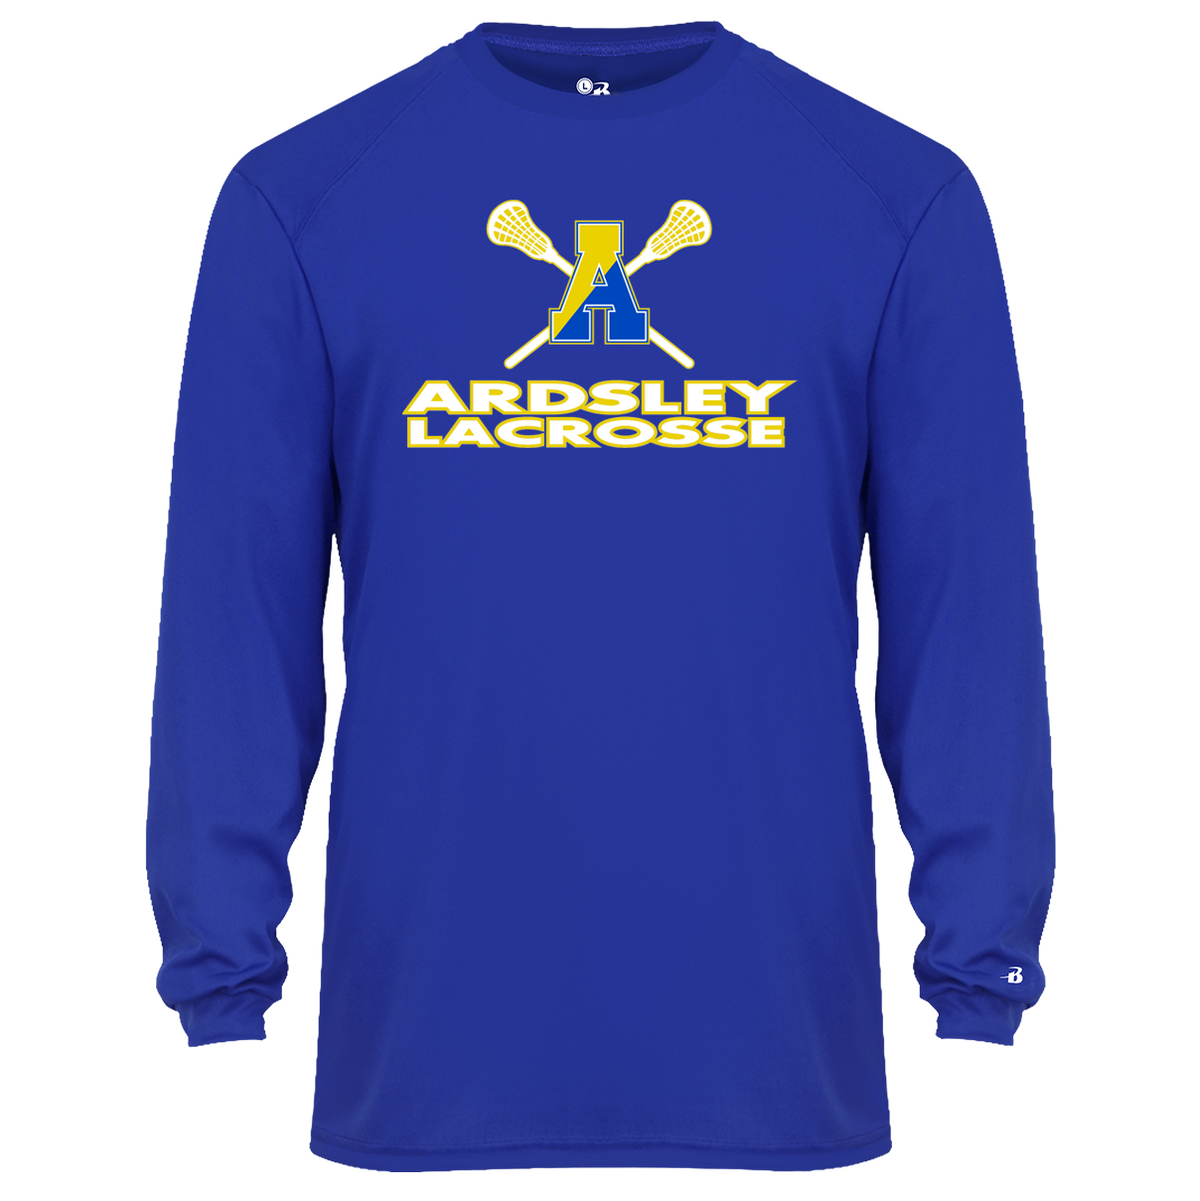 Ardsley High School Lacrosse B-Core Long Sleeve